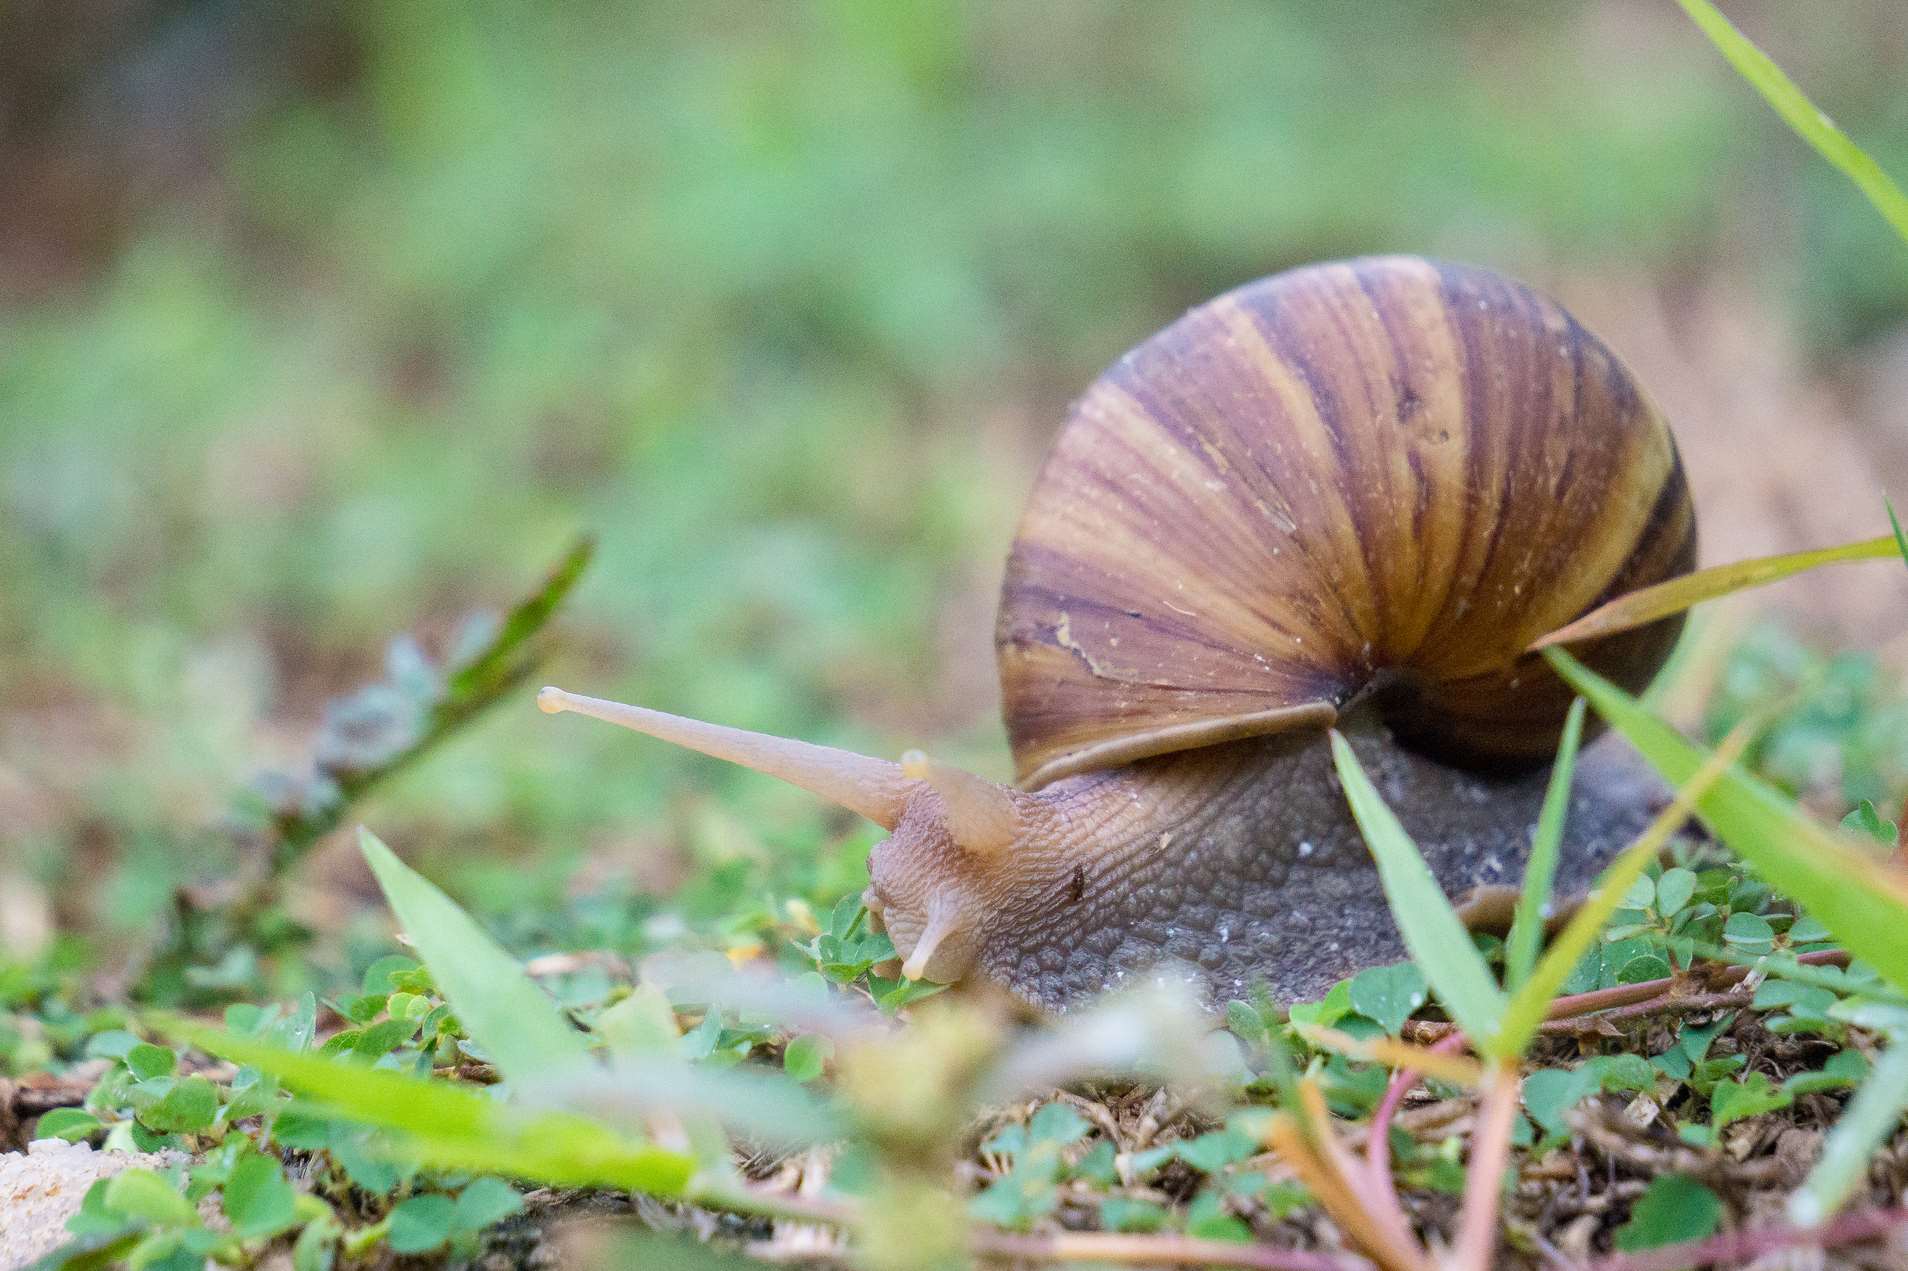 A land snail